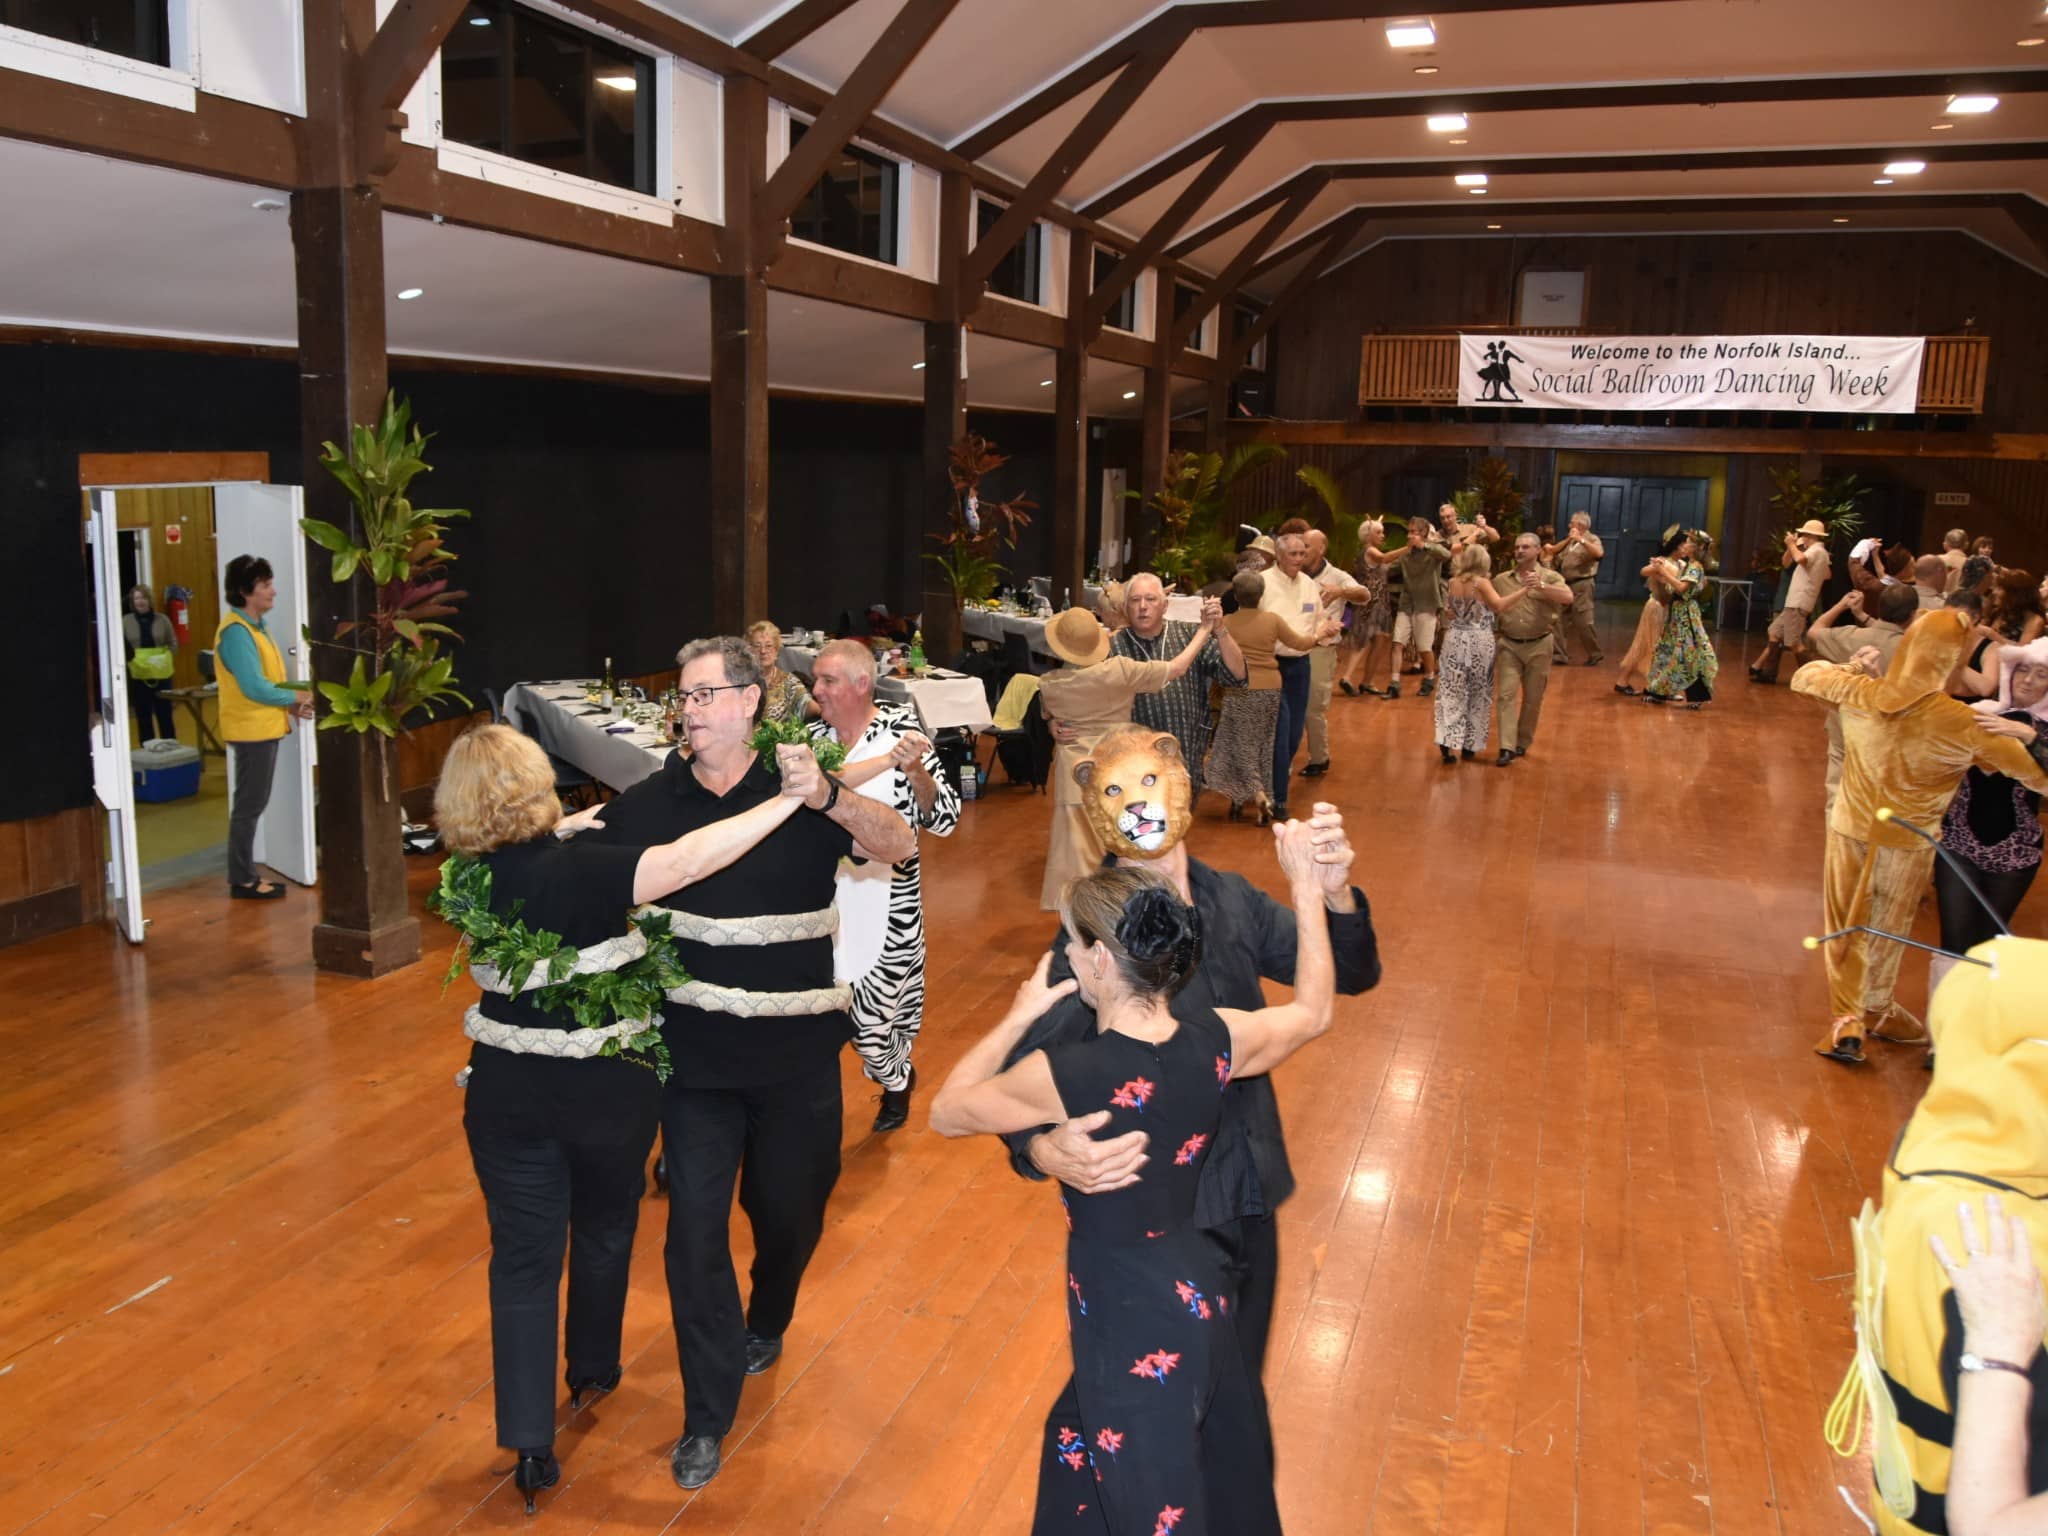 Ballroom Dancing Norfolk Island 1